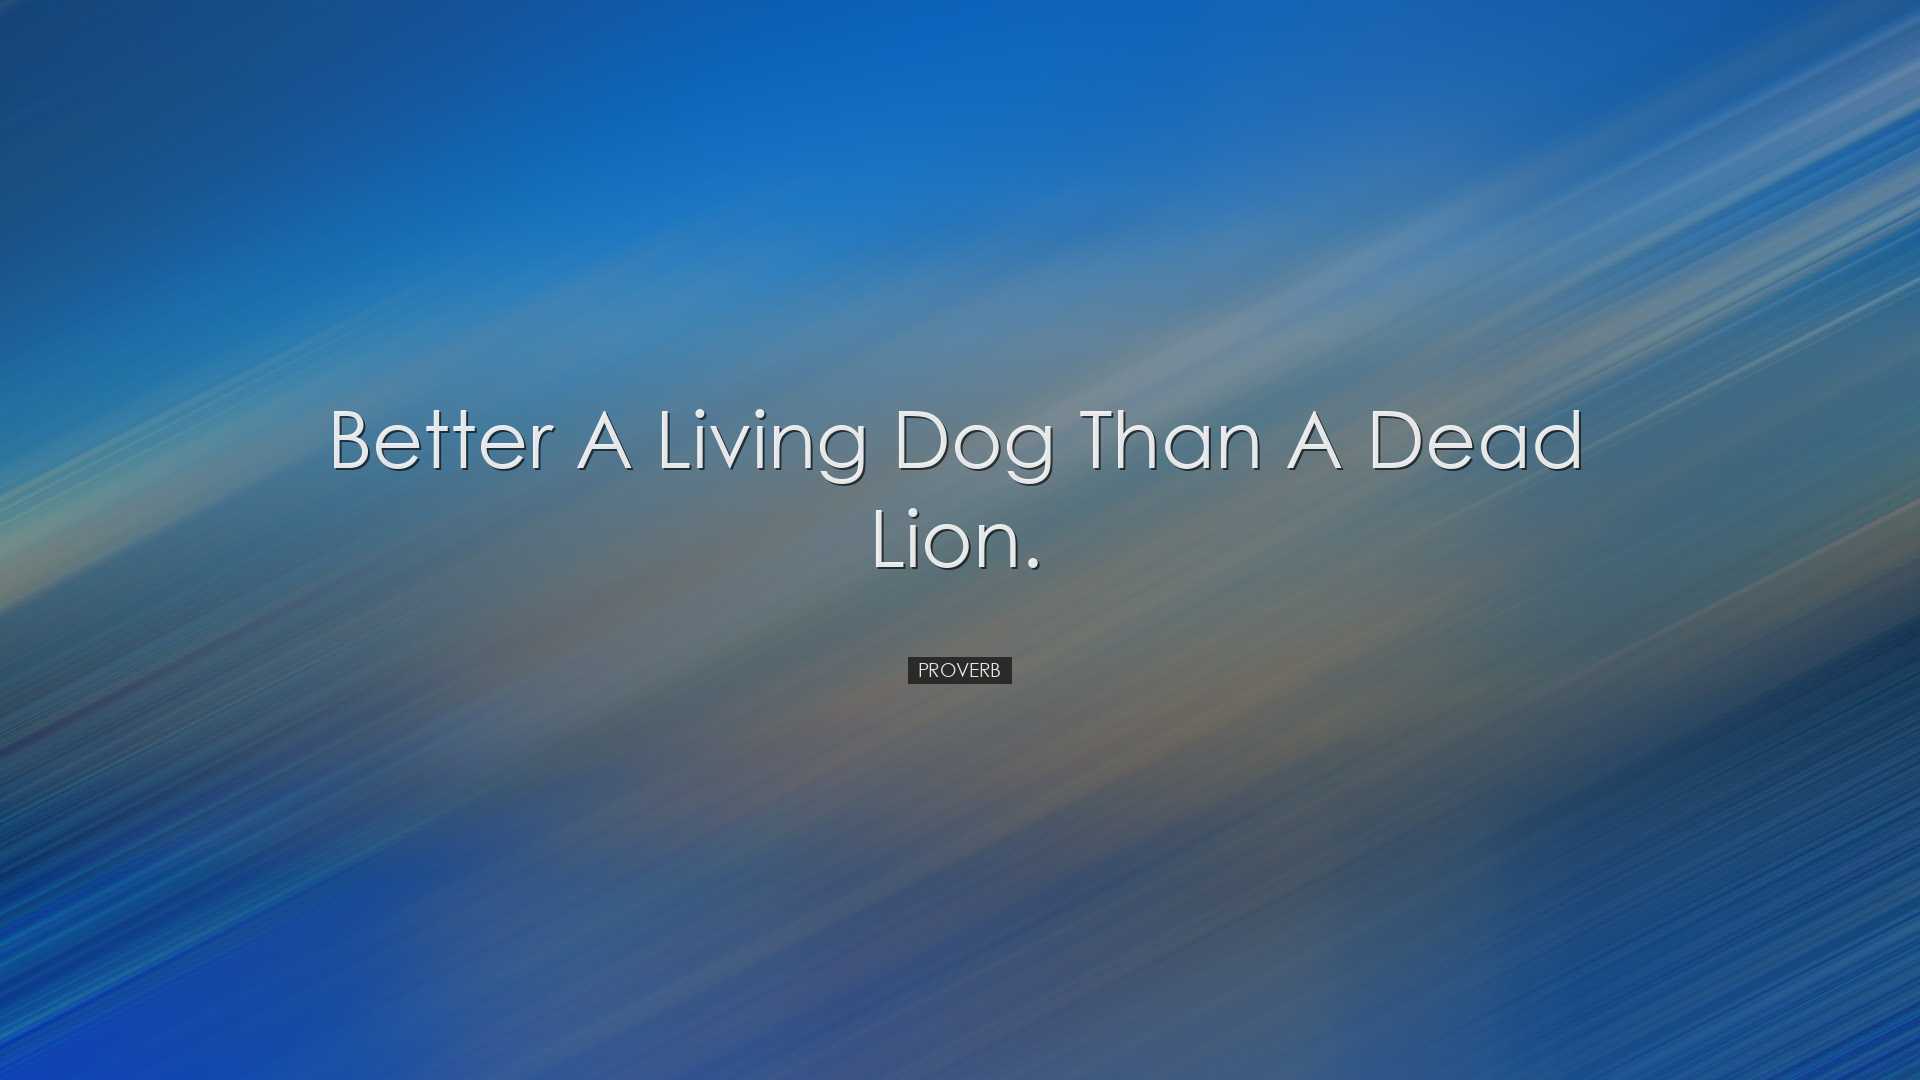 Better a living dog than a dead lion. - Proverb